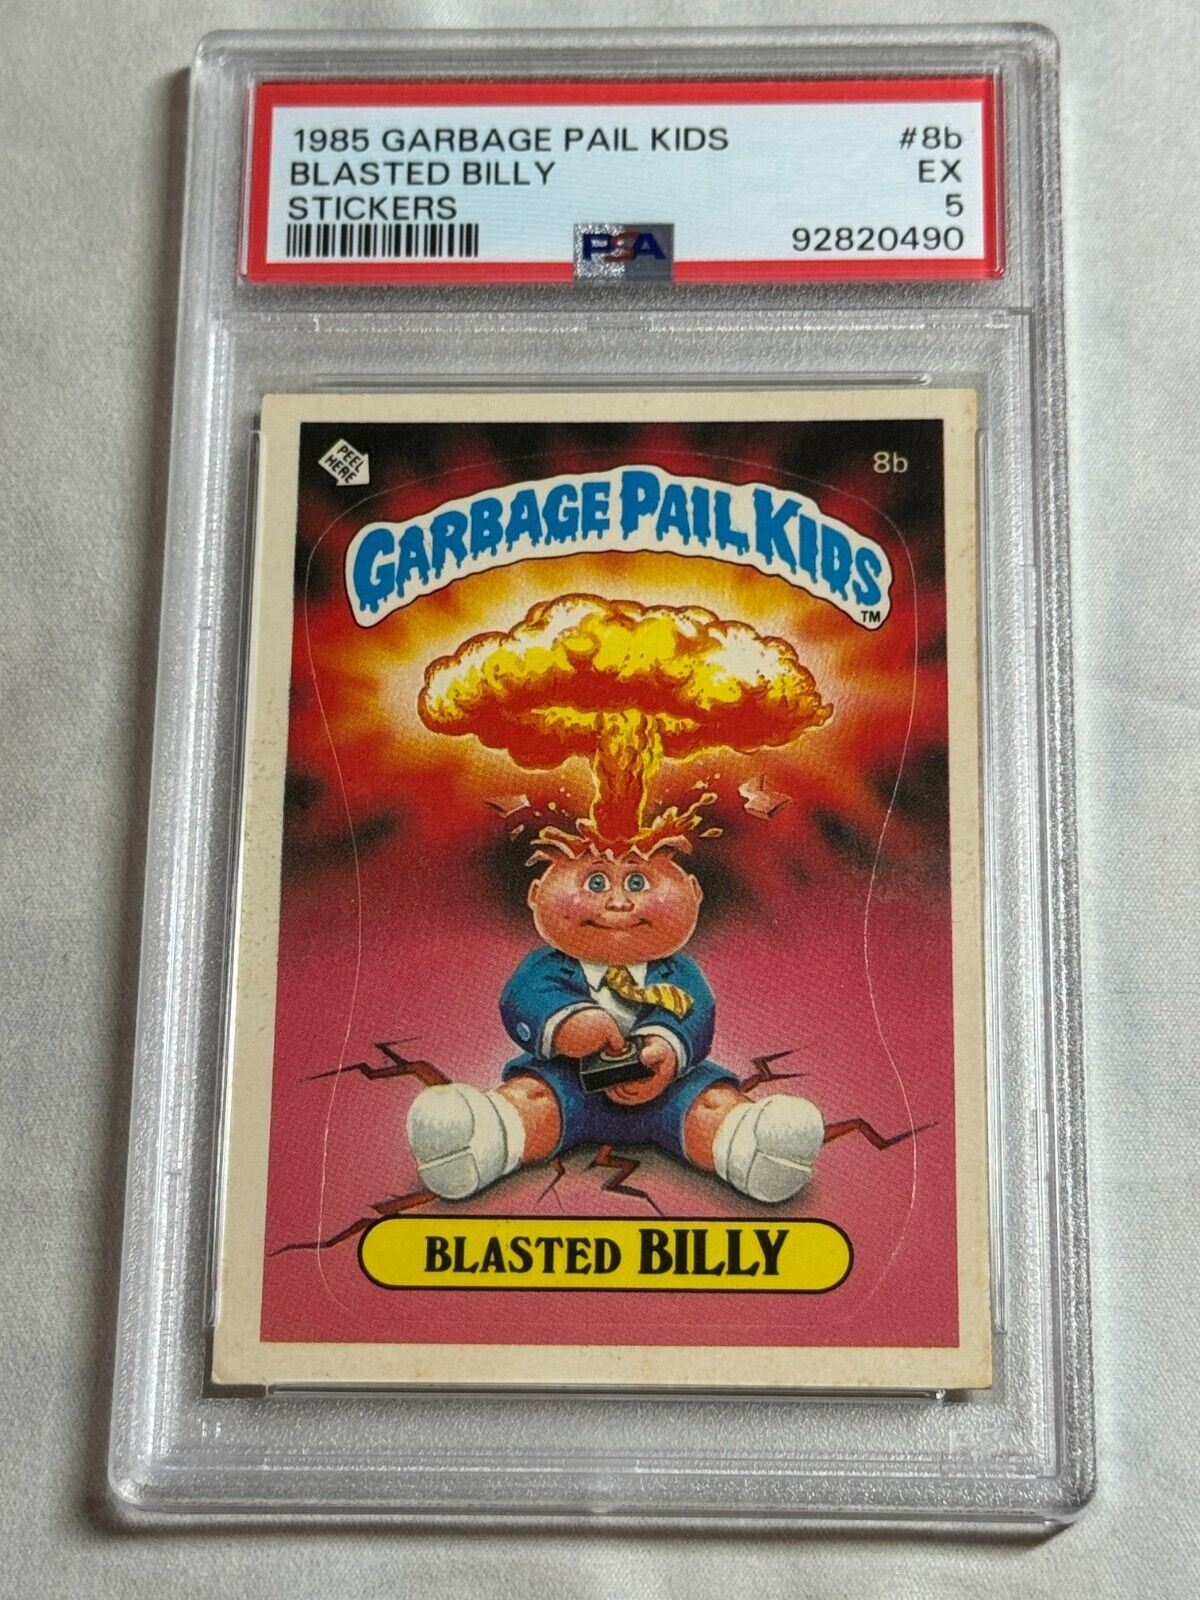 1985 Garbage Pail Kids GPK Stickers Blasted Billy #8b PSA 5